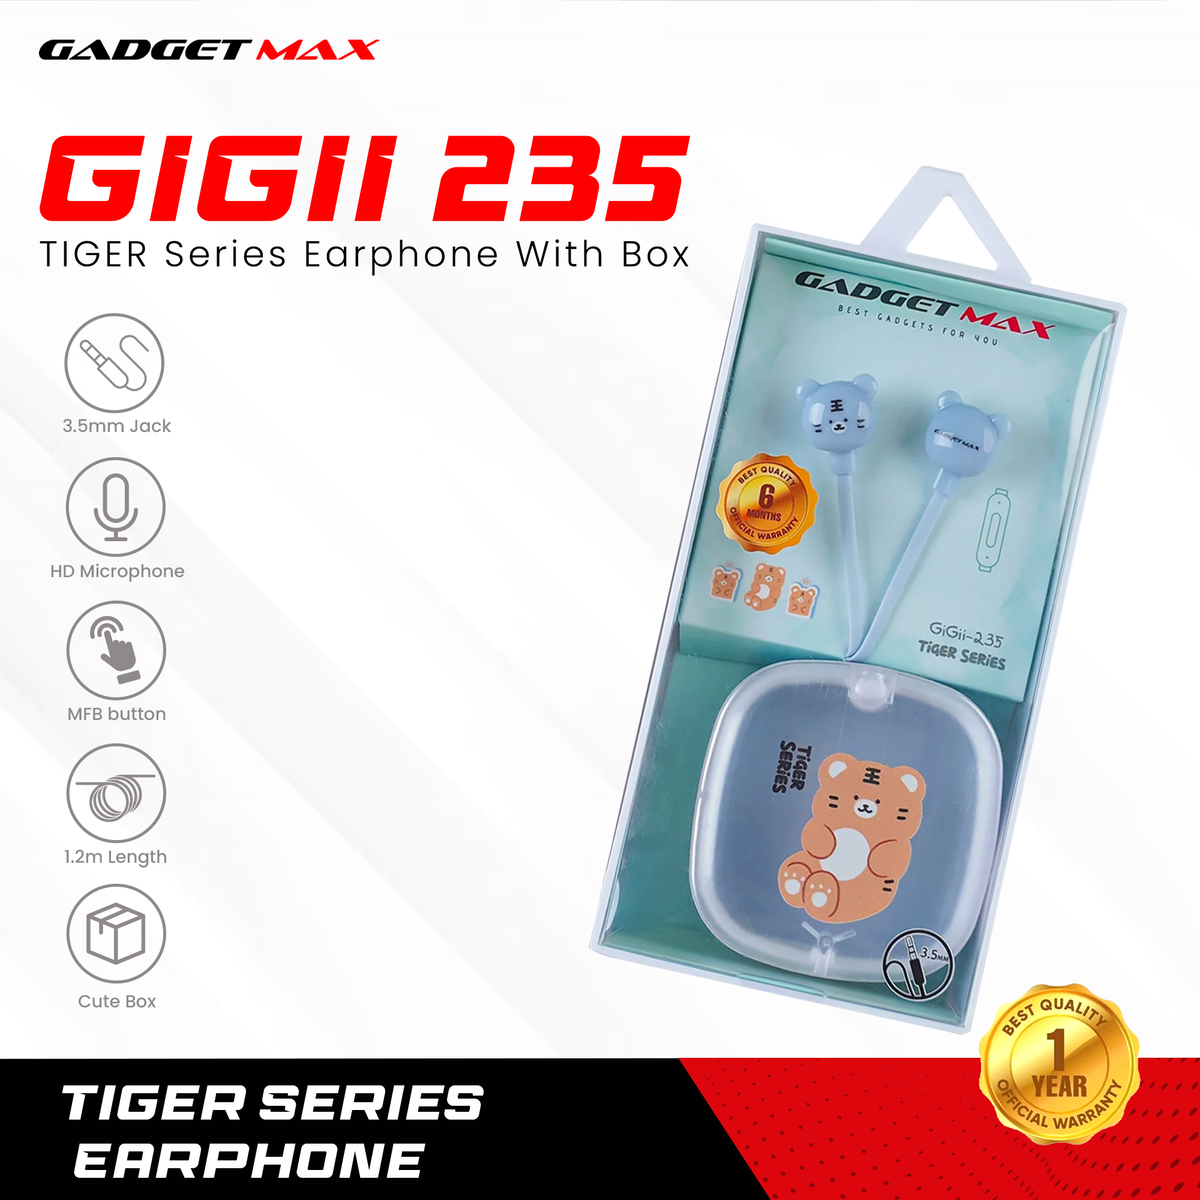 GADGET MAX GIGII-235 TIGER SERIES 3.5MM WIRED EARPHONE - PURPLE